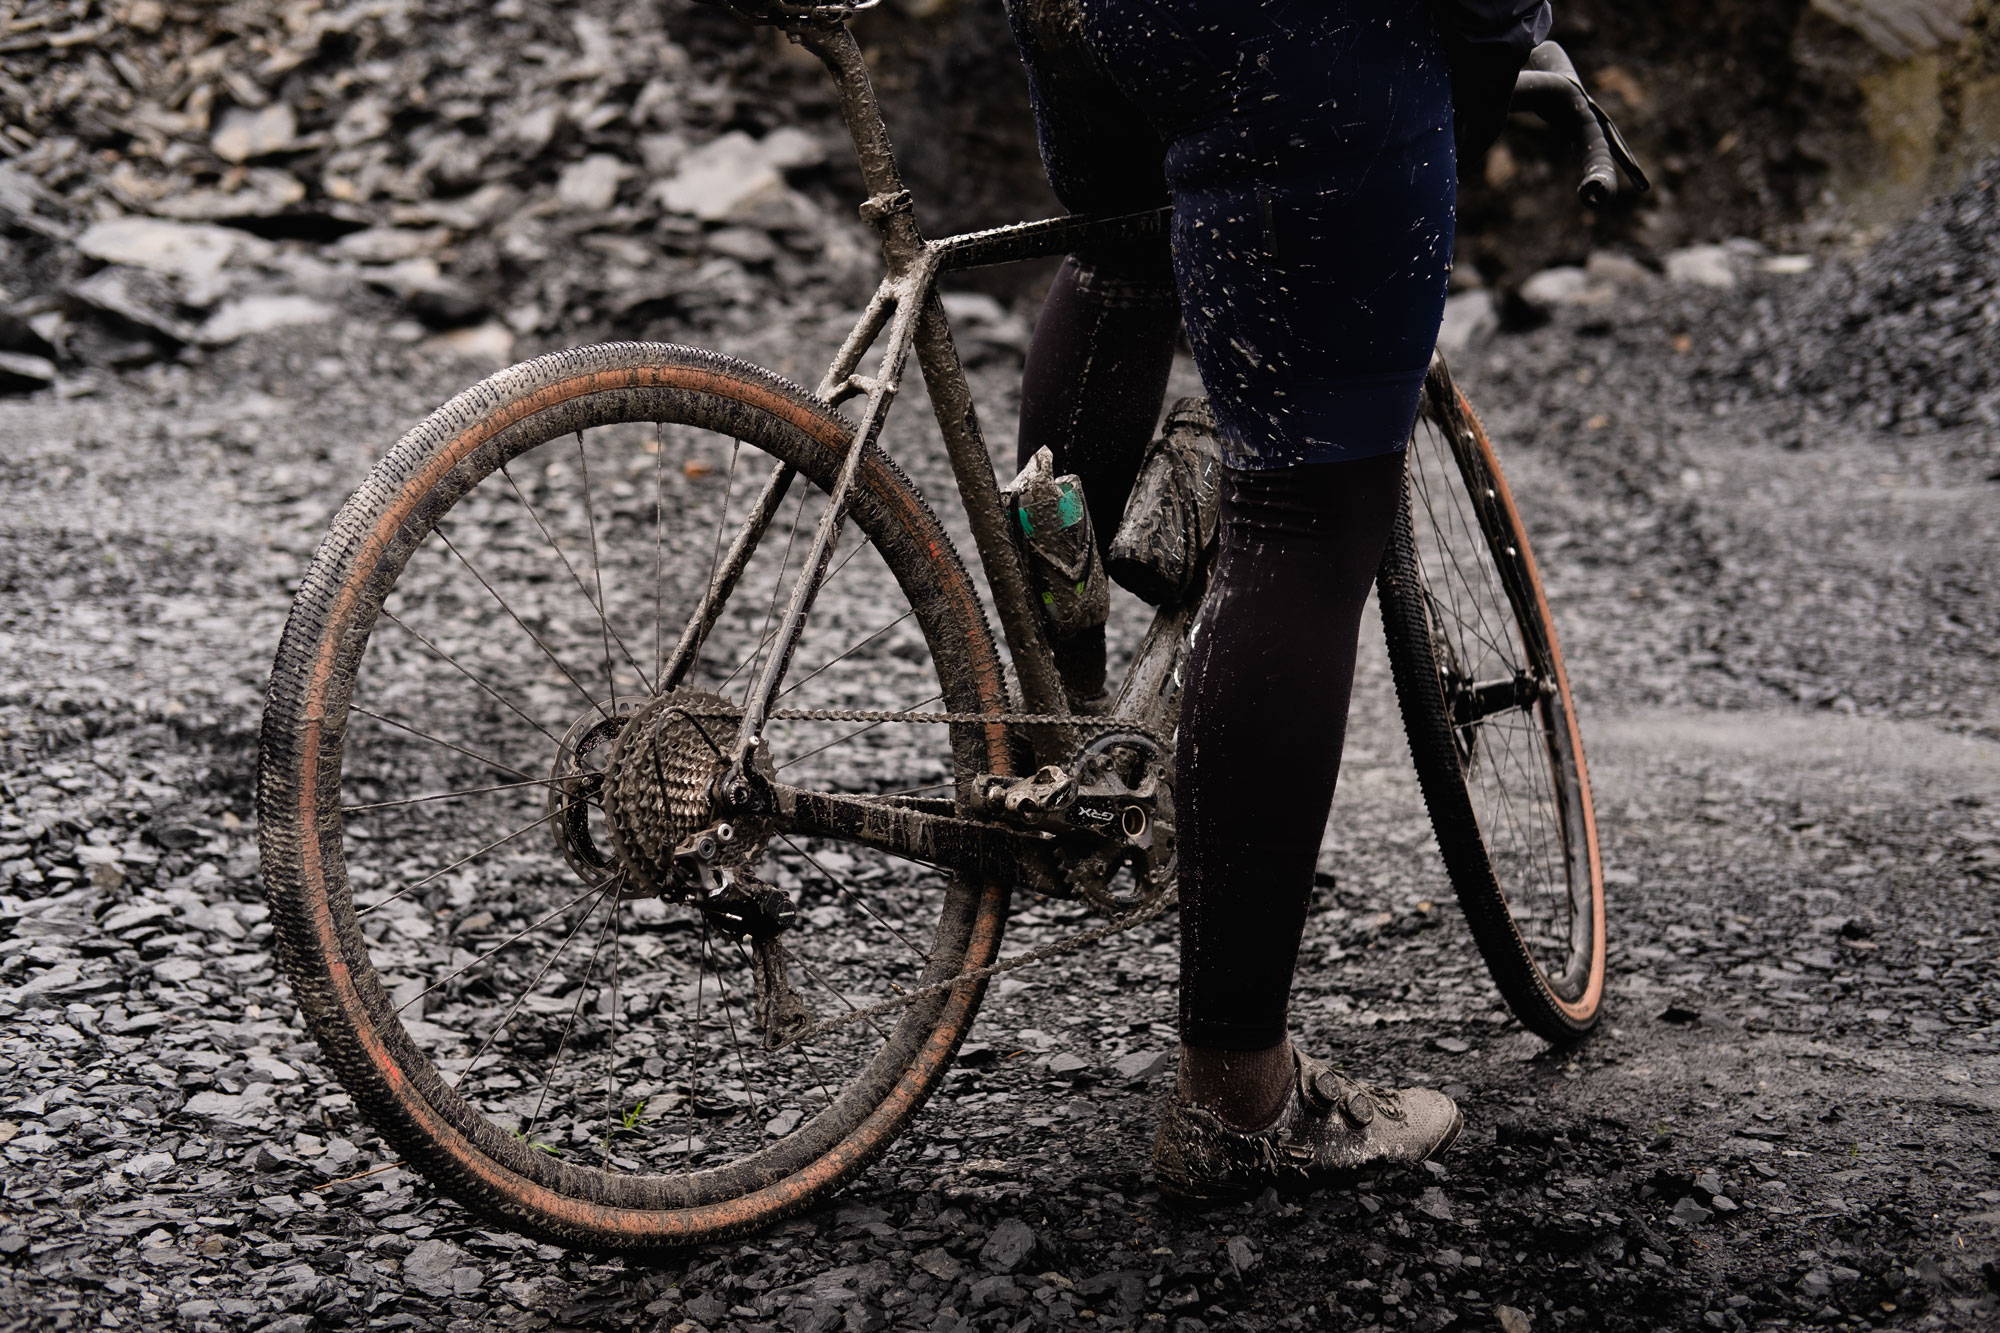 Muddy gravel bike and cyclist